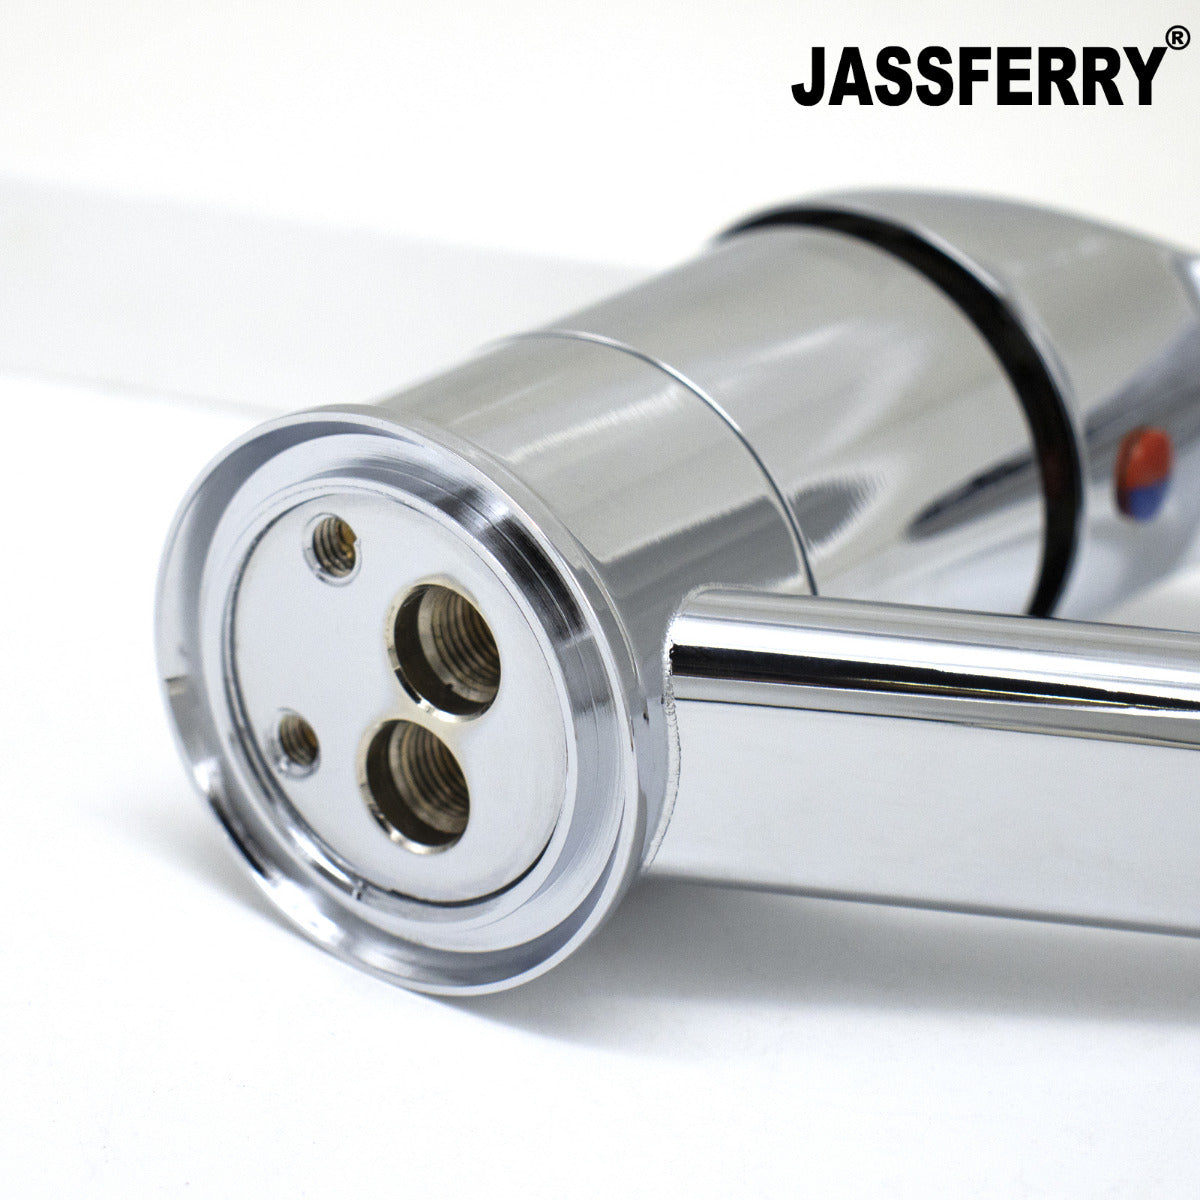 JassferryJASSFERRY Traditional Kitchen Sink Tap Mixer Monobloc Single Lever Swivel SpoutKitchen taps